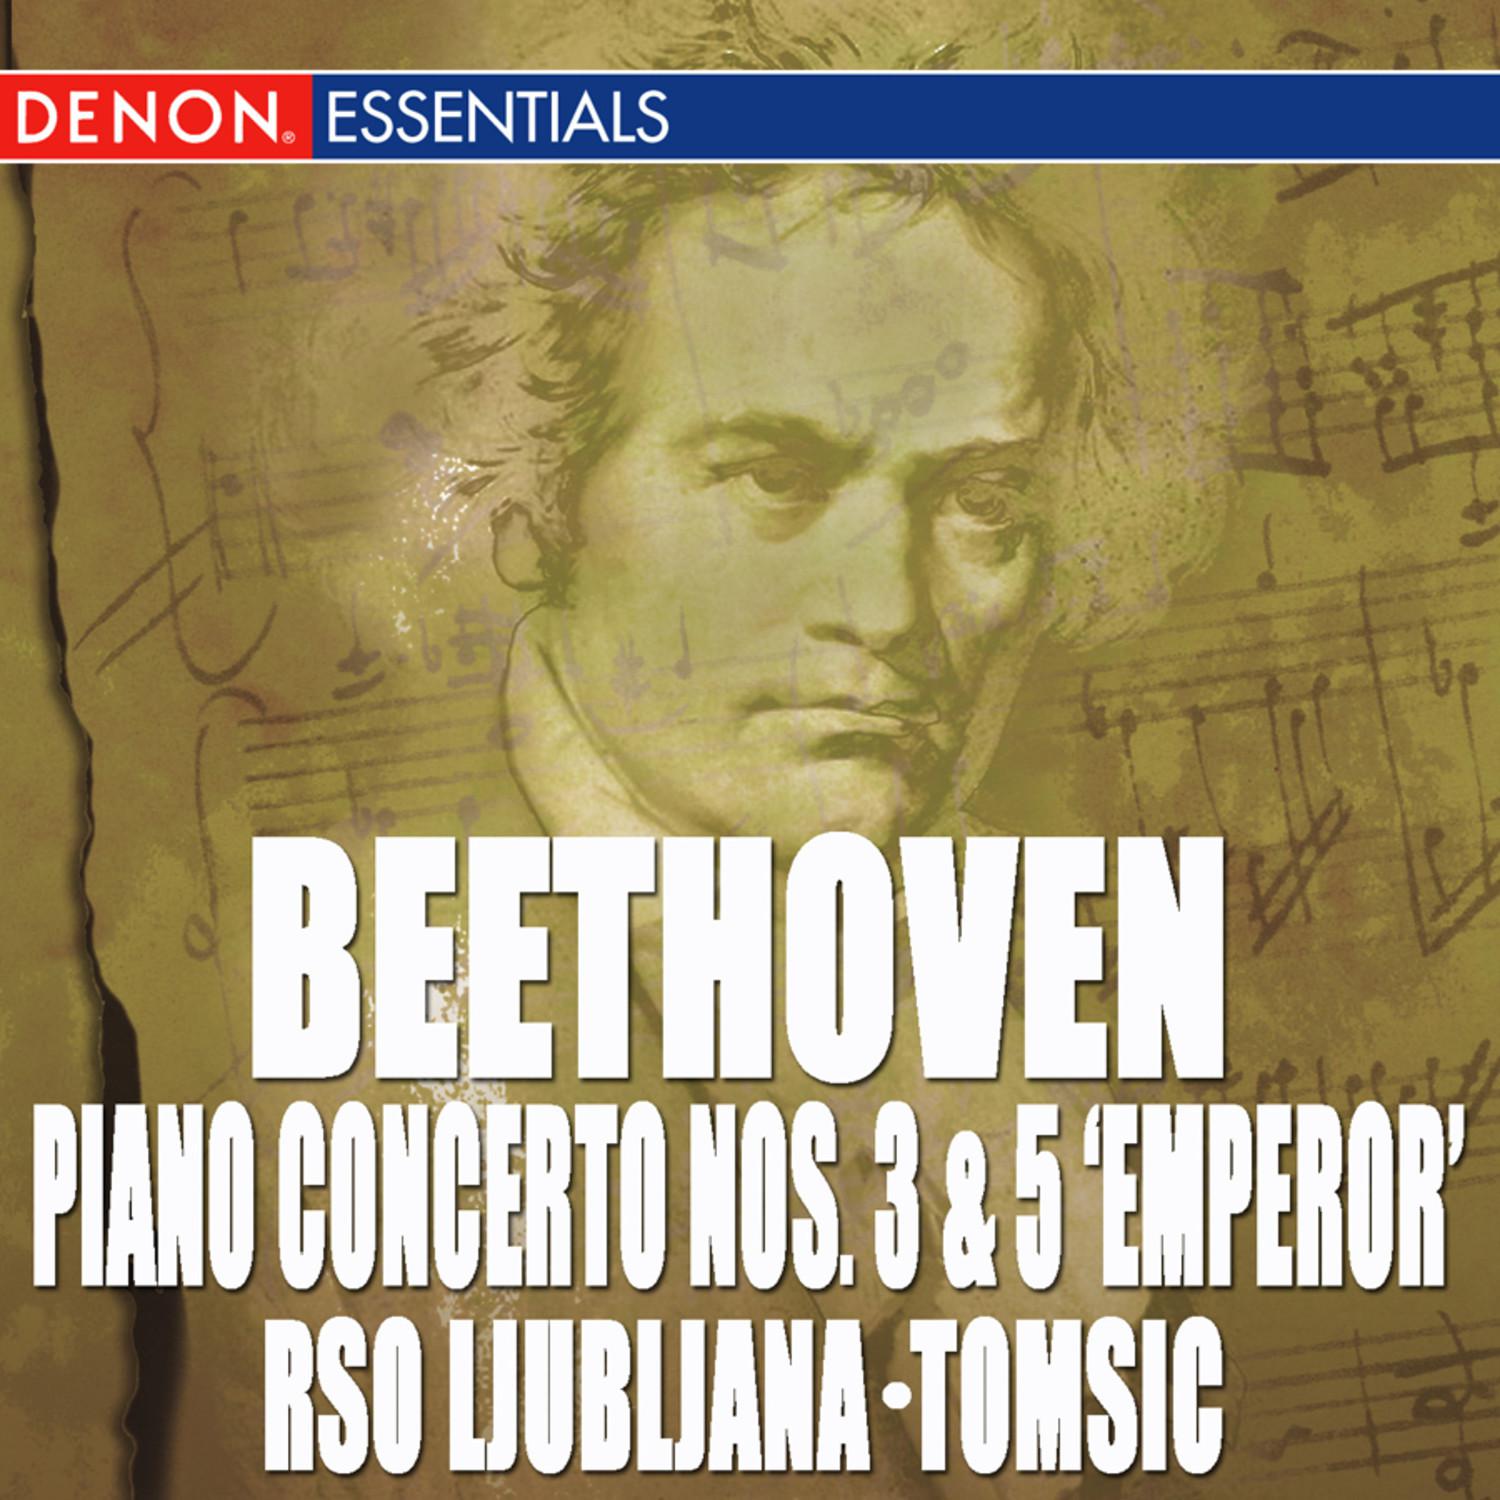 Concerto for Piano and Orchestra No. 5 in E-Flat Major "Emperor", Op. 73: III. Rondo: Allegro